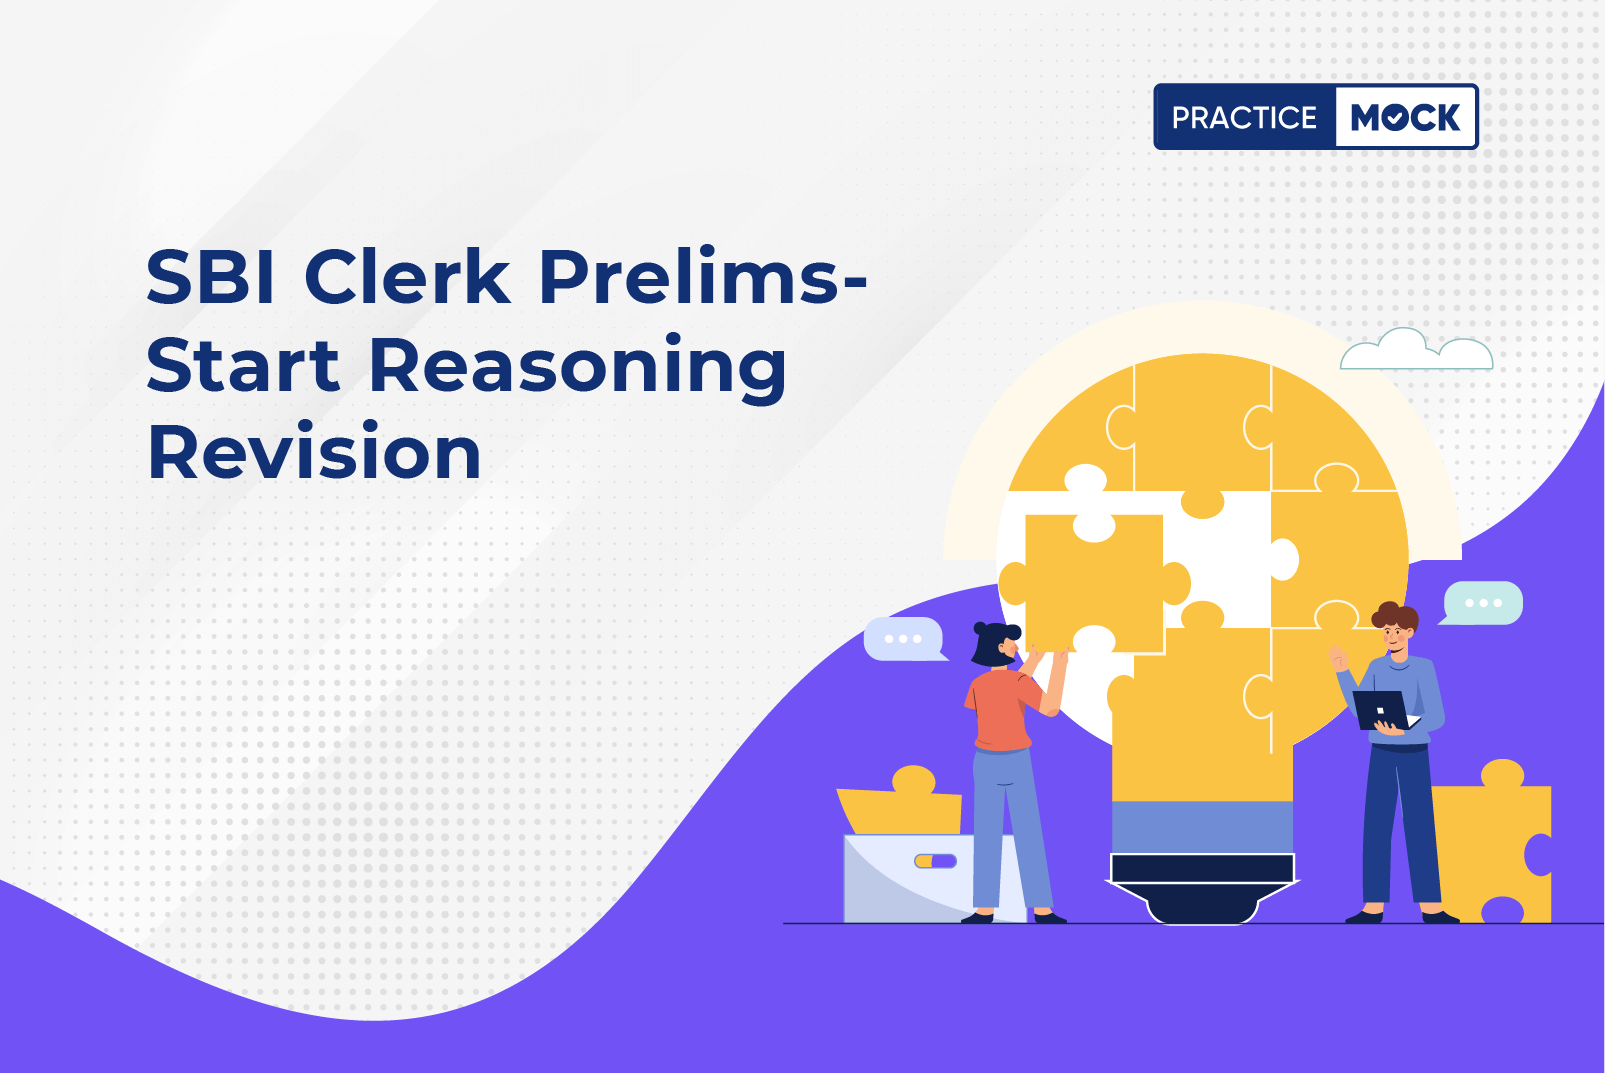 SBI Clerk Prelims- Start Reasoning Revision